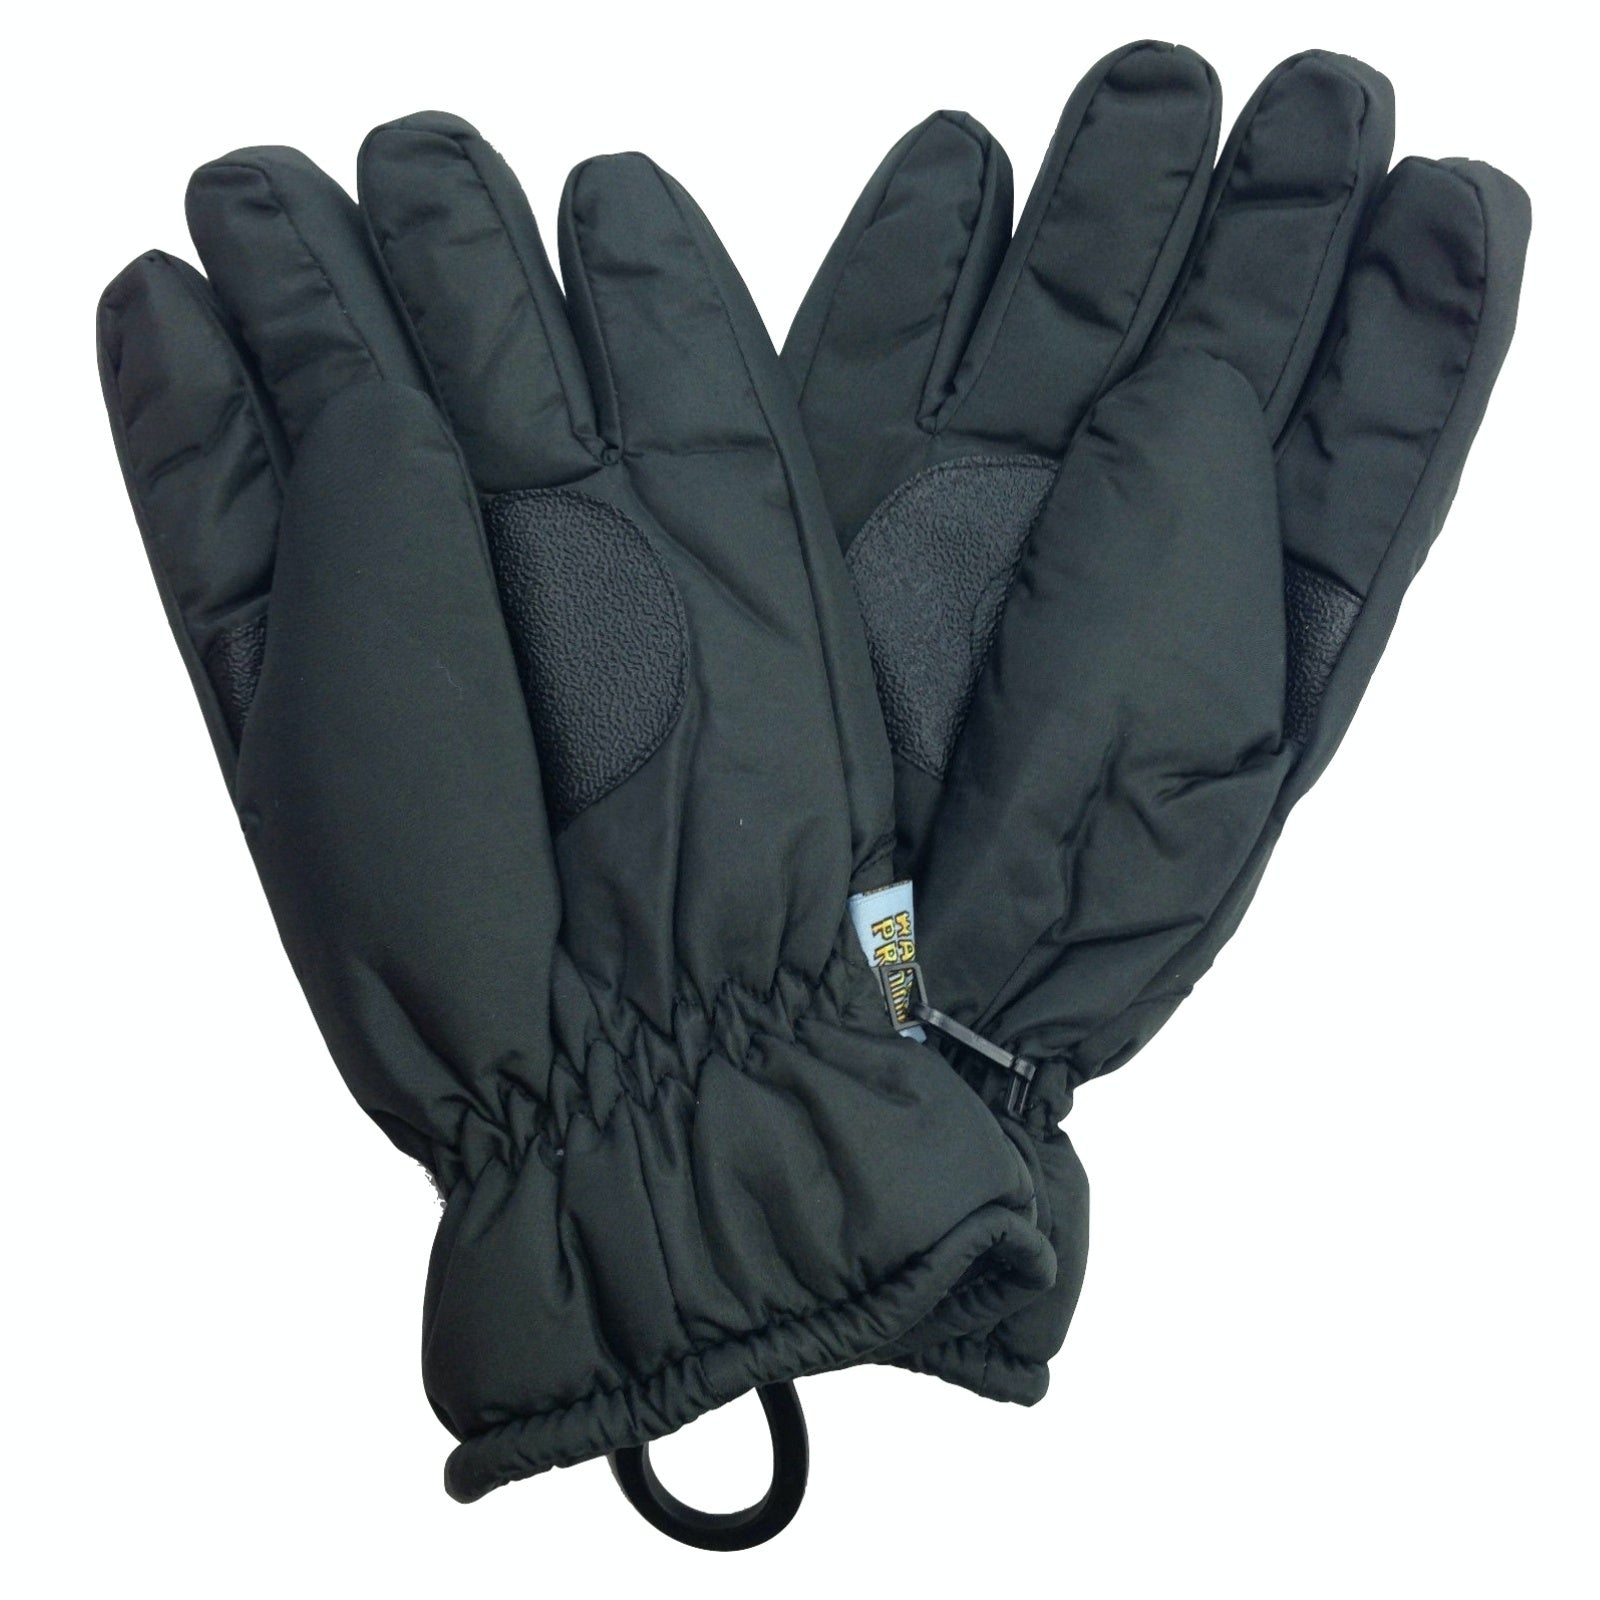 Mens Thermal Ski Gloves Waterproof Warm Winter Snow Insulation Plain - Black - S/M